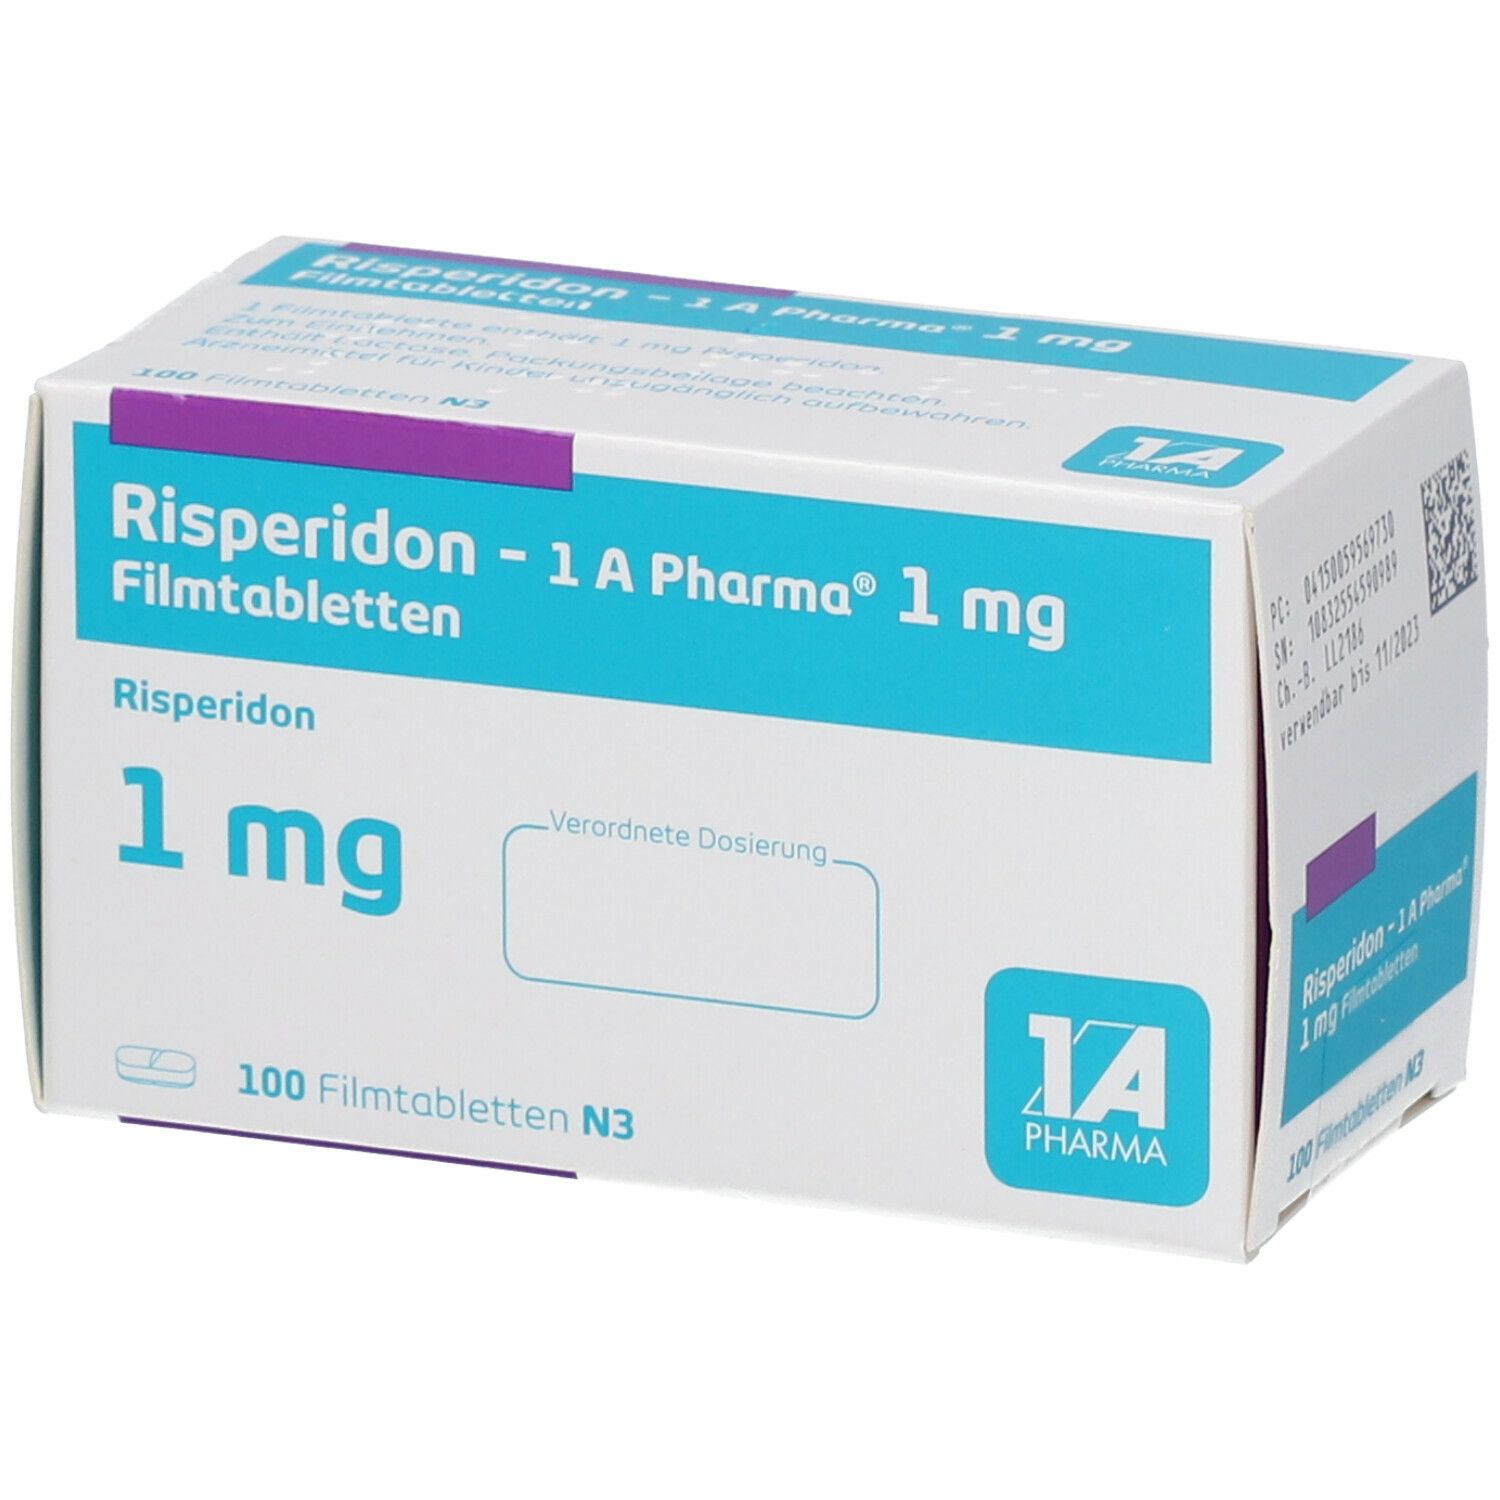 Risperidon 1A Pharma® 1Mg